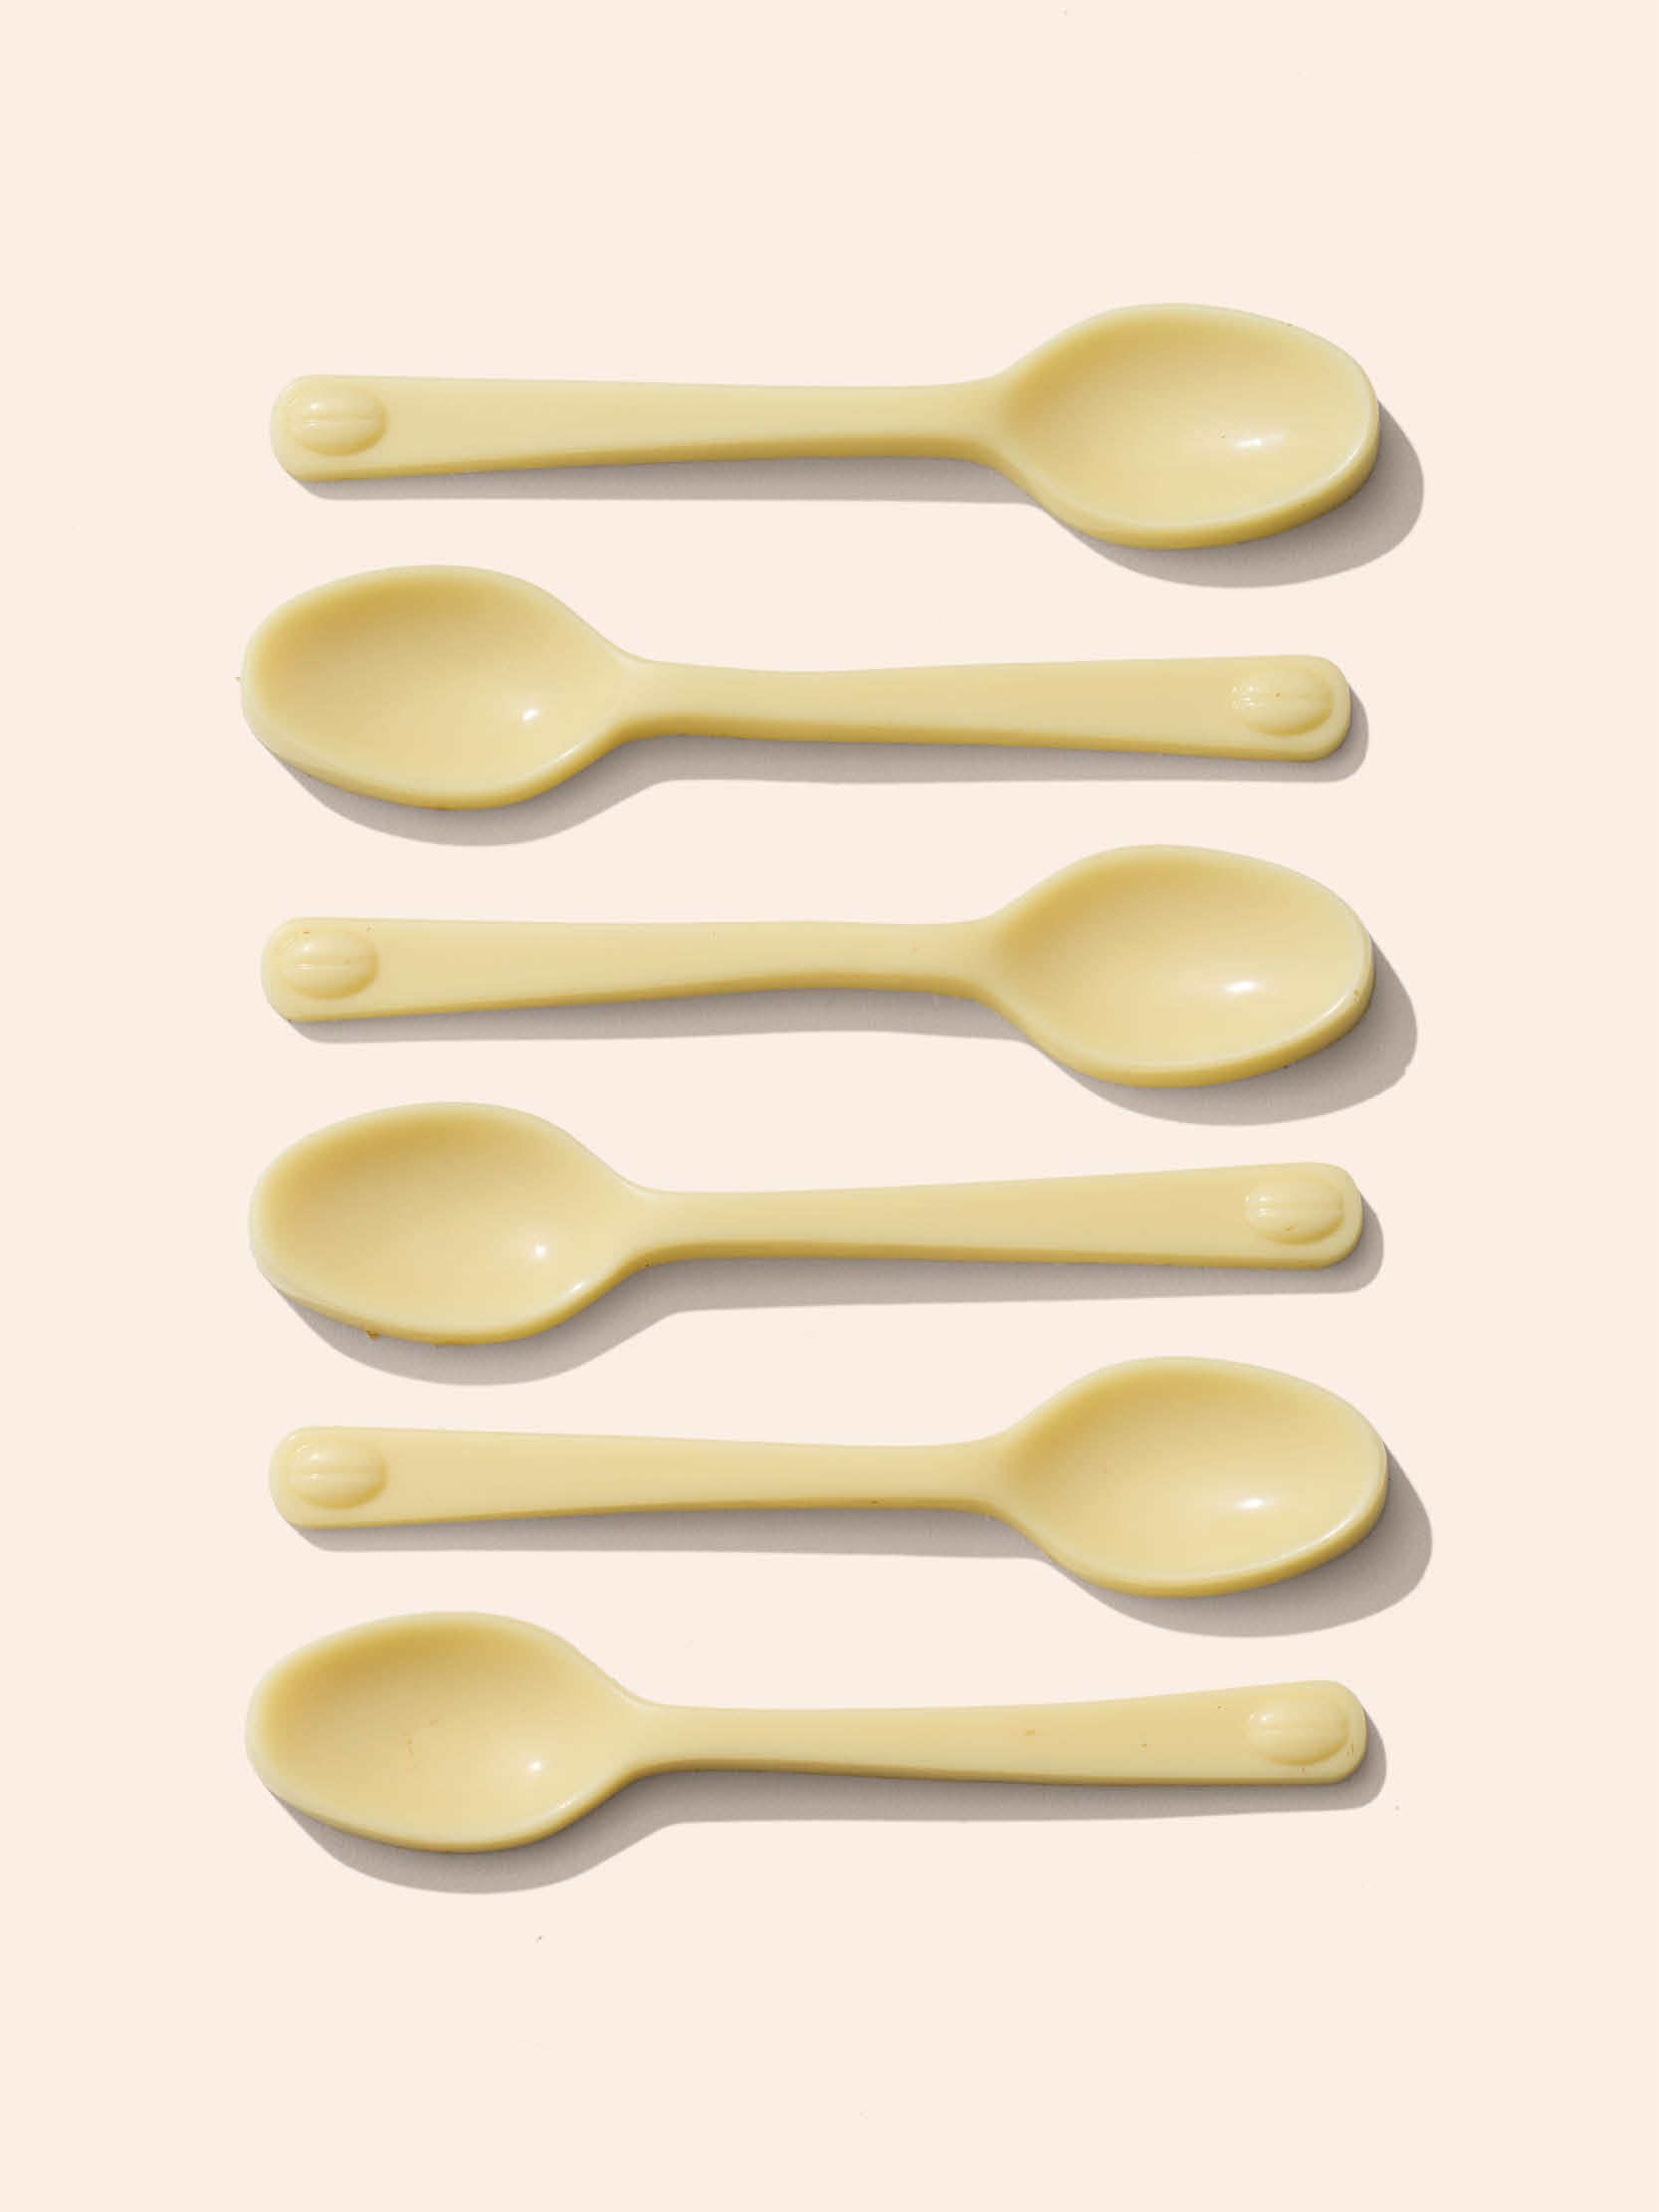 White Chocolate Spoons